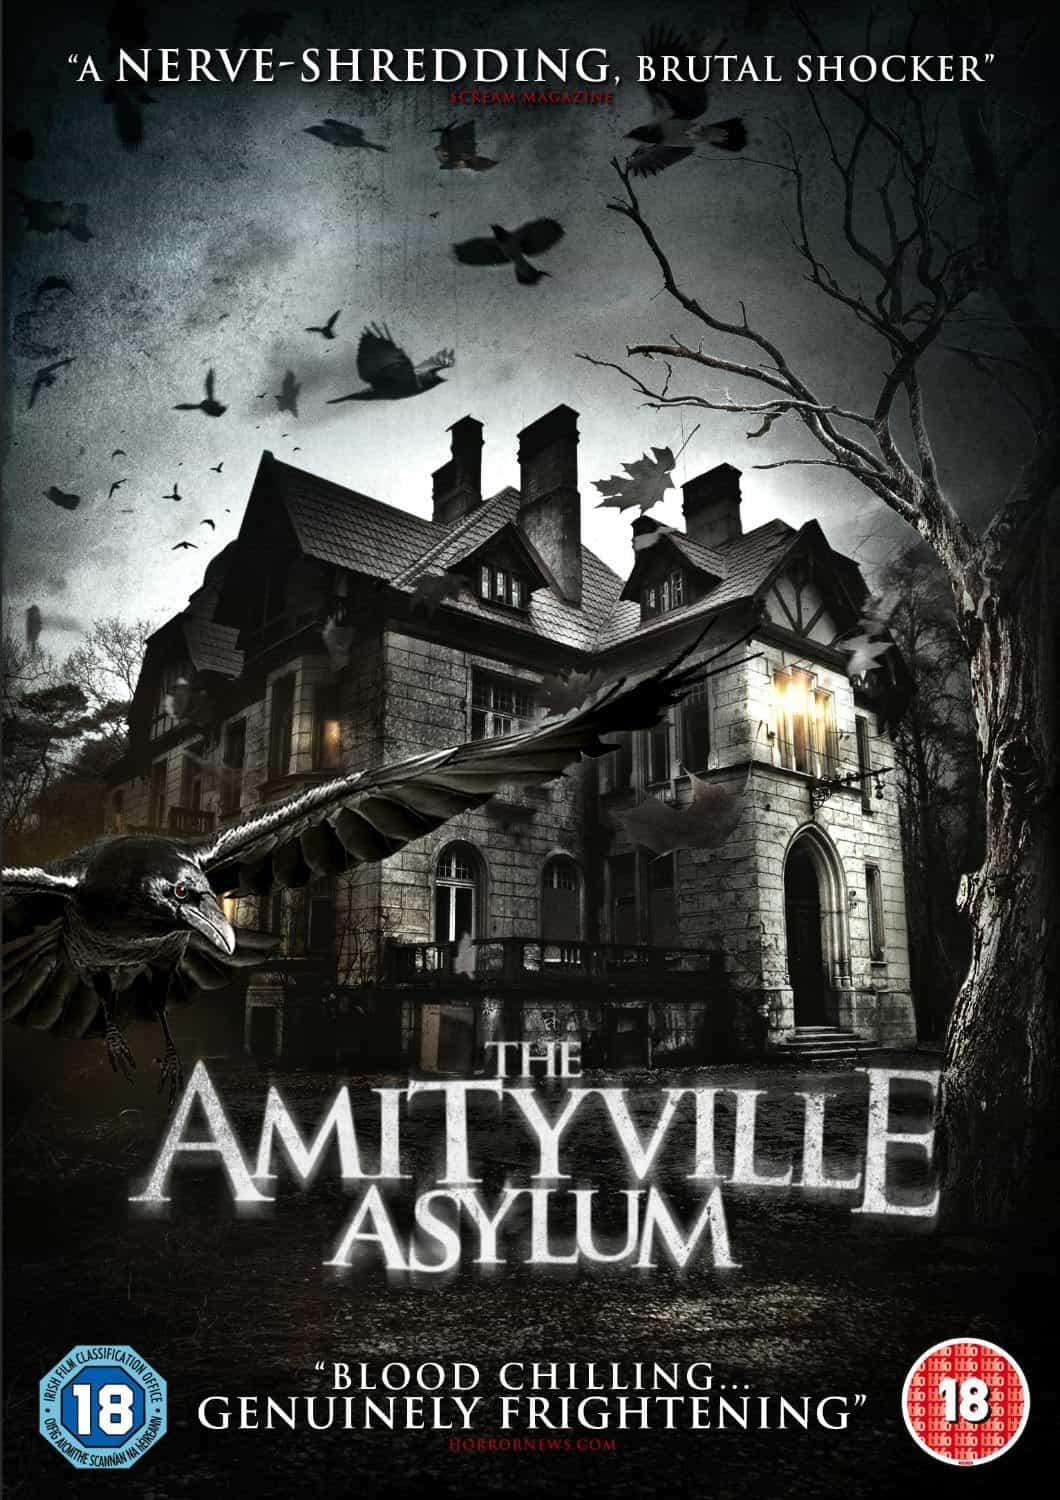 Horror Movie Review: The Amityville Asylum (2013)